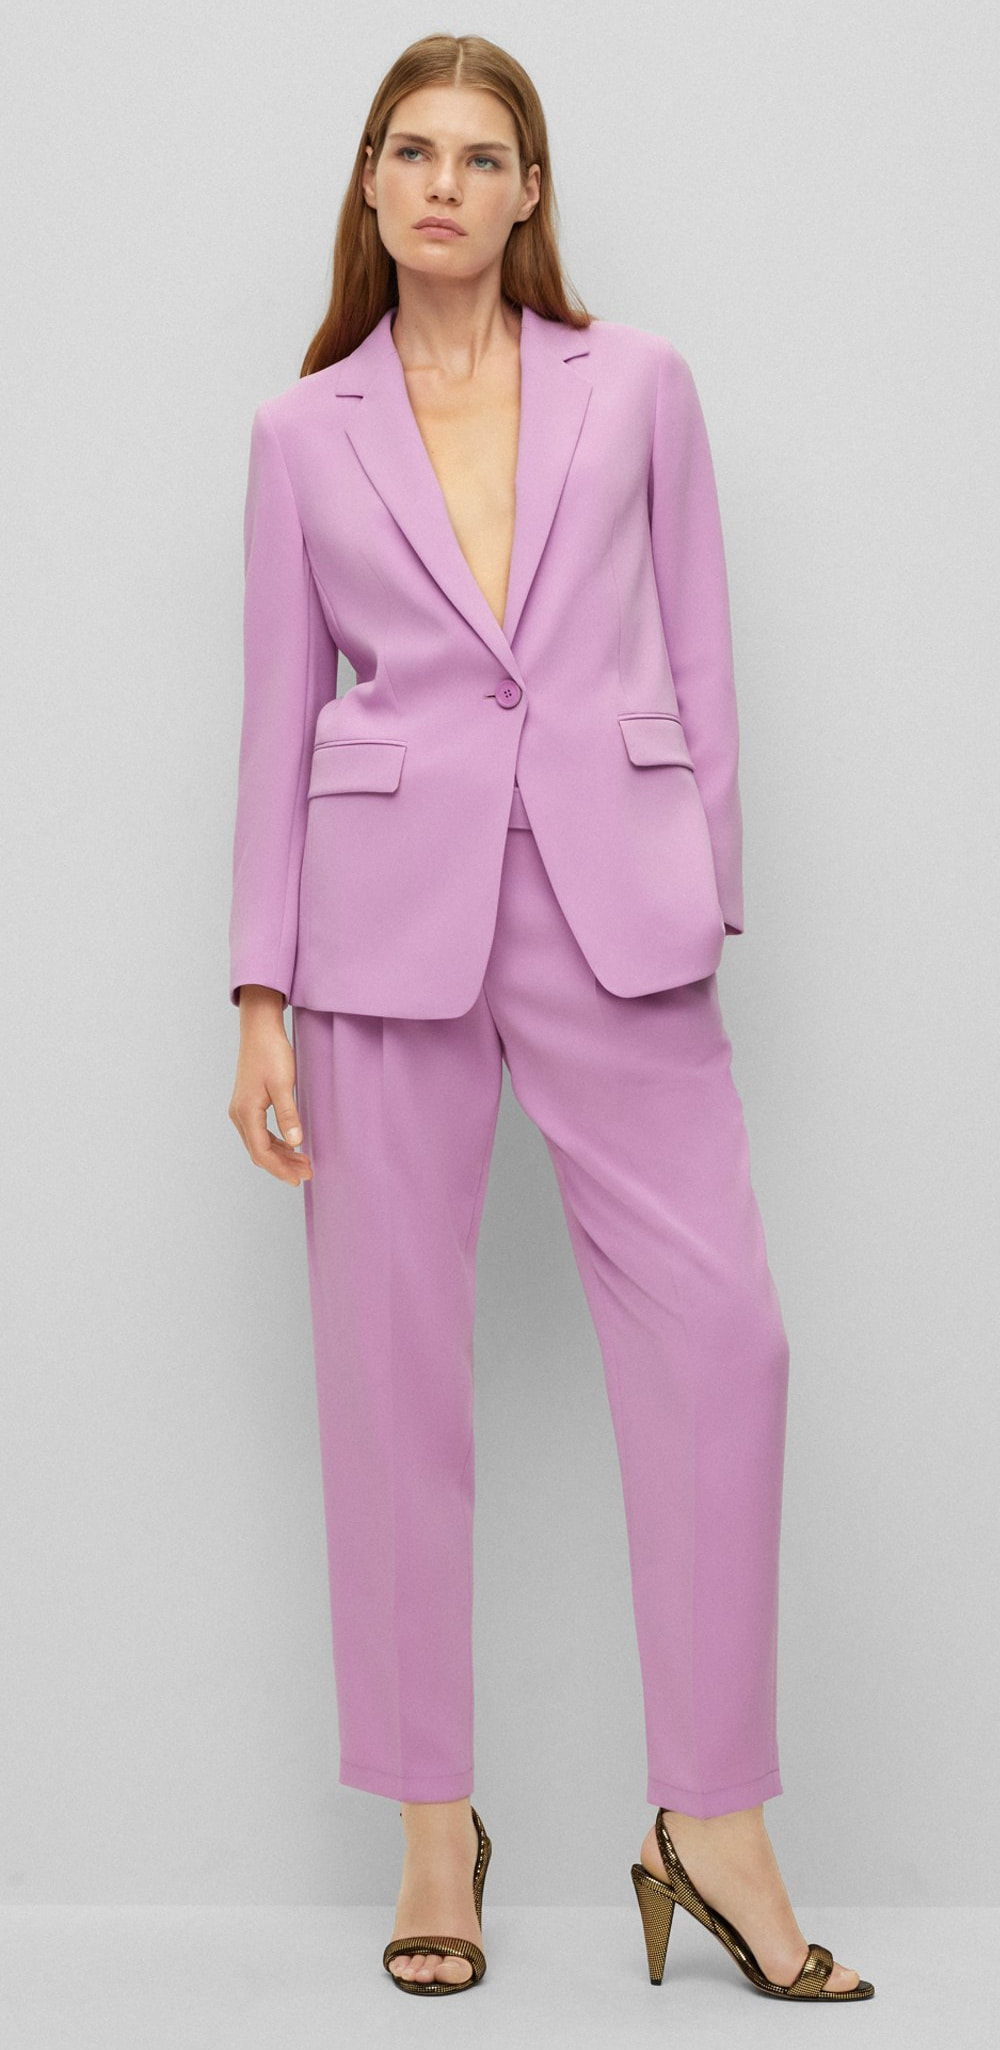 Light pink Hugo Boss suit separates